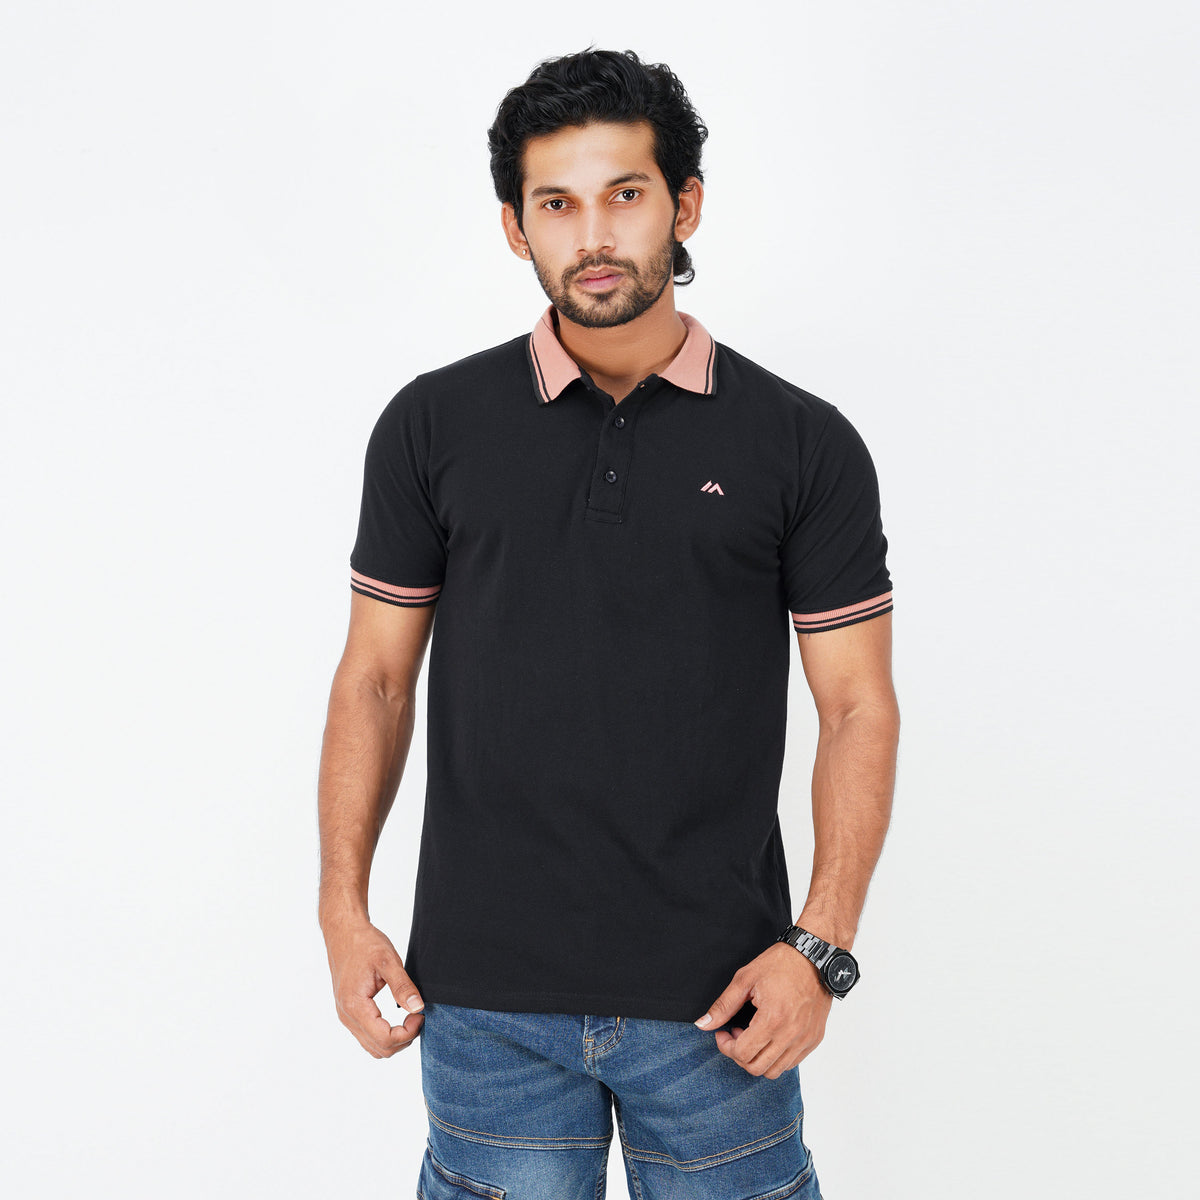 Contrast Polo Shirt - Black